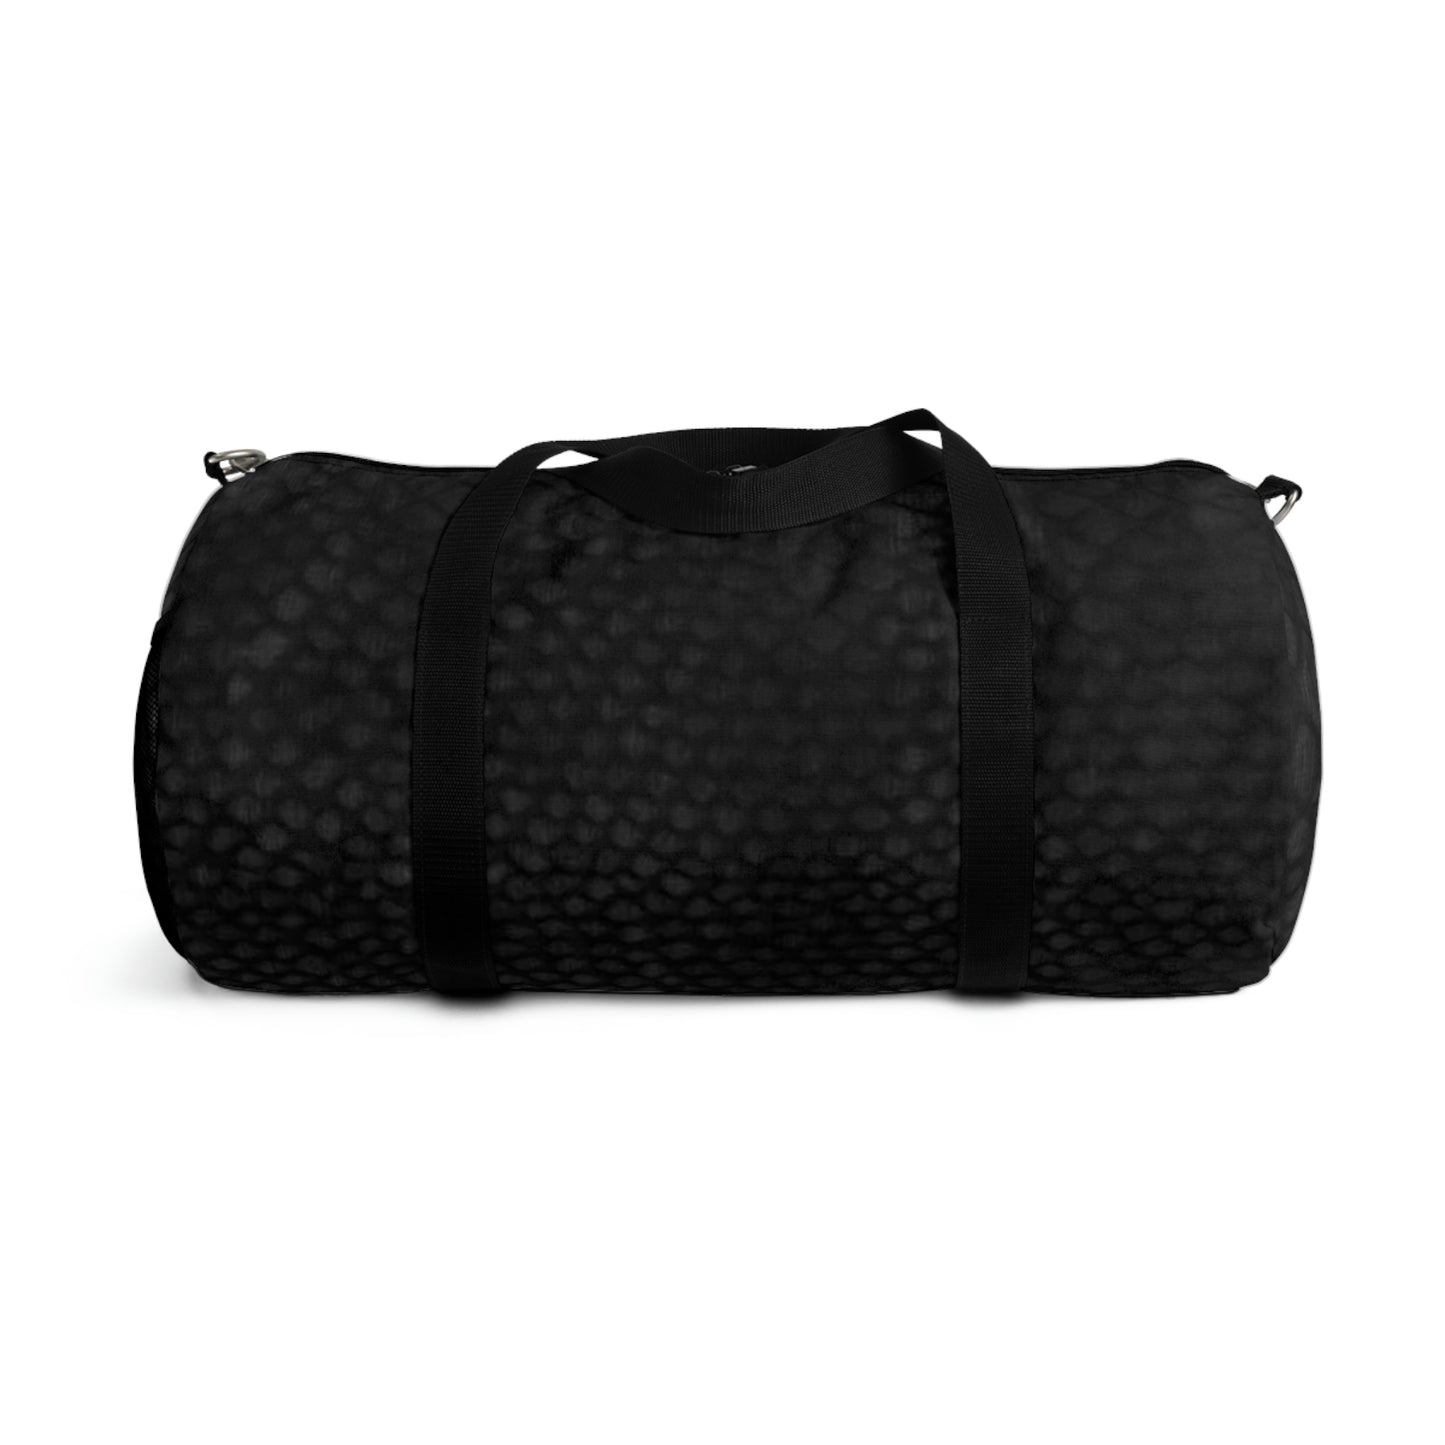 Black Duffle Bag, Weekender Duffle Bag, Carry-on Travel Overnight Canvas Duffel Bag